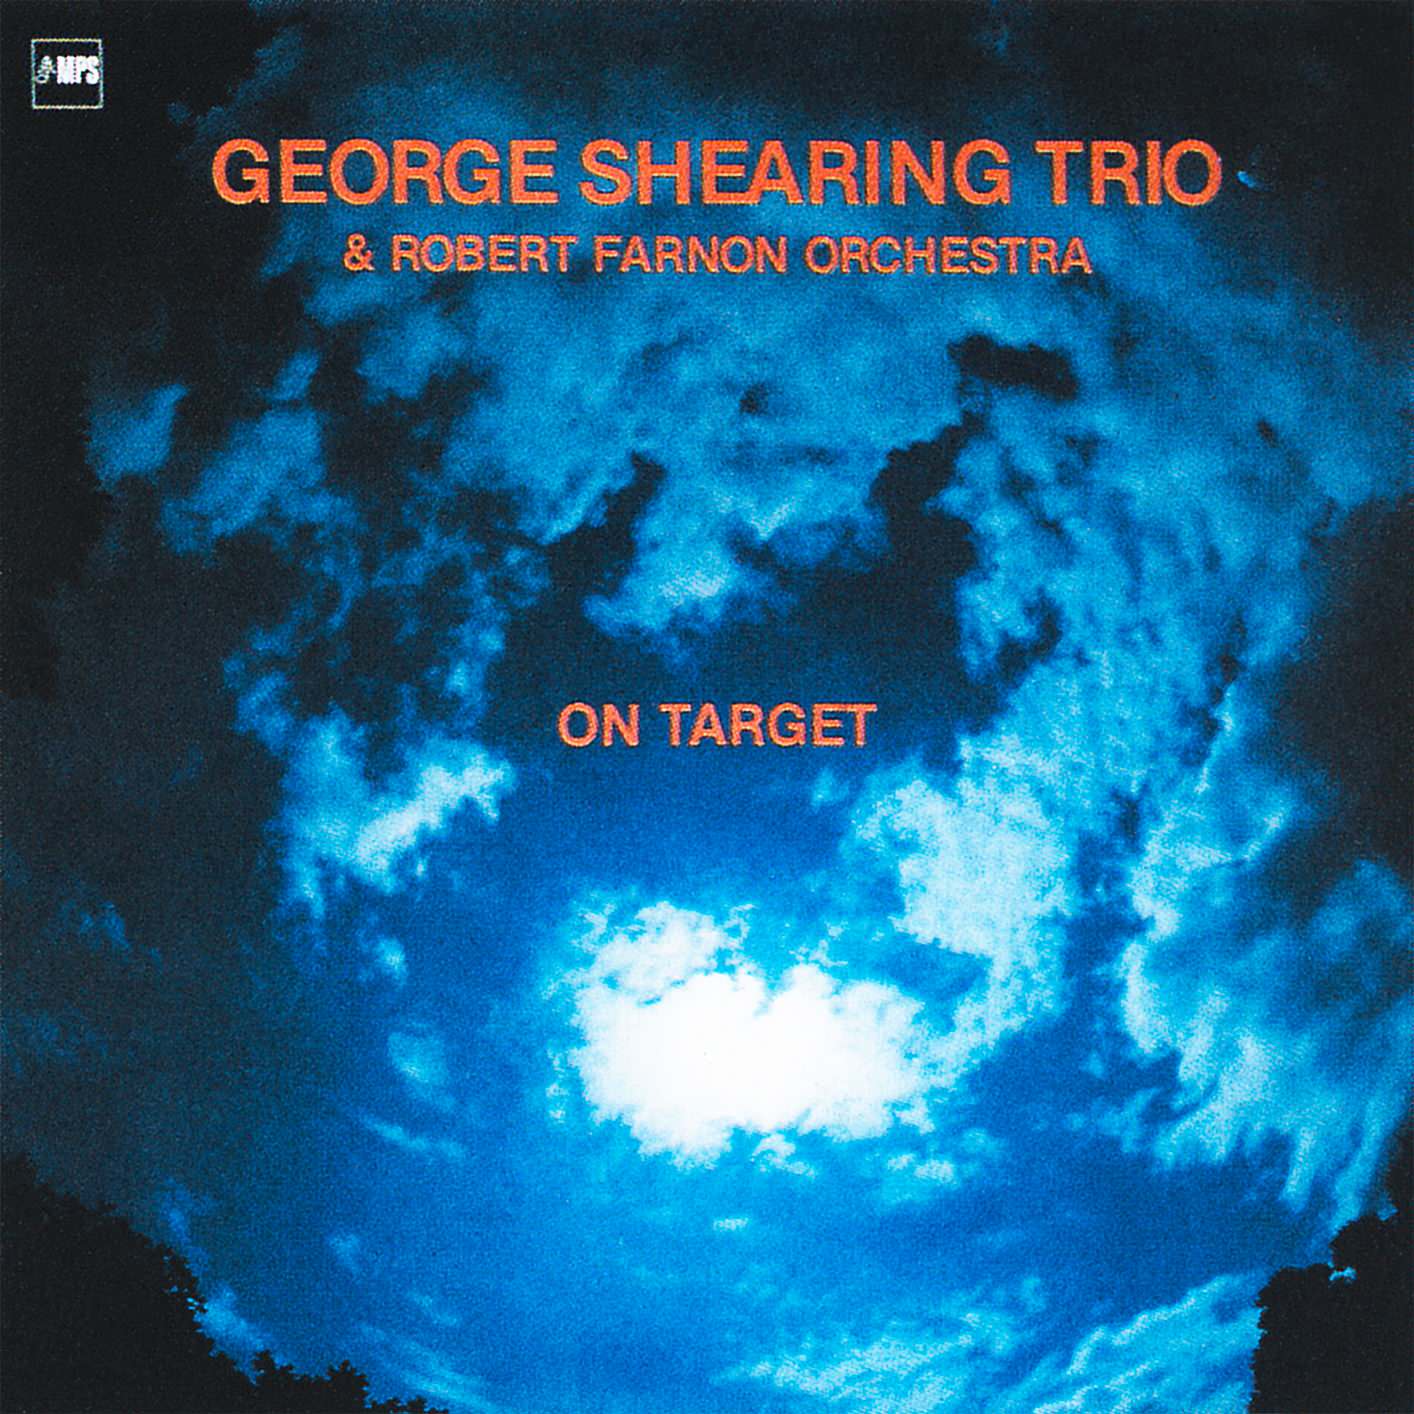 George Shearing Trio & The Robert Farnon Orchestra – On Target (1982/2014) [HighResAudio FLAC 24bit/88,2kHz]